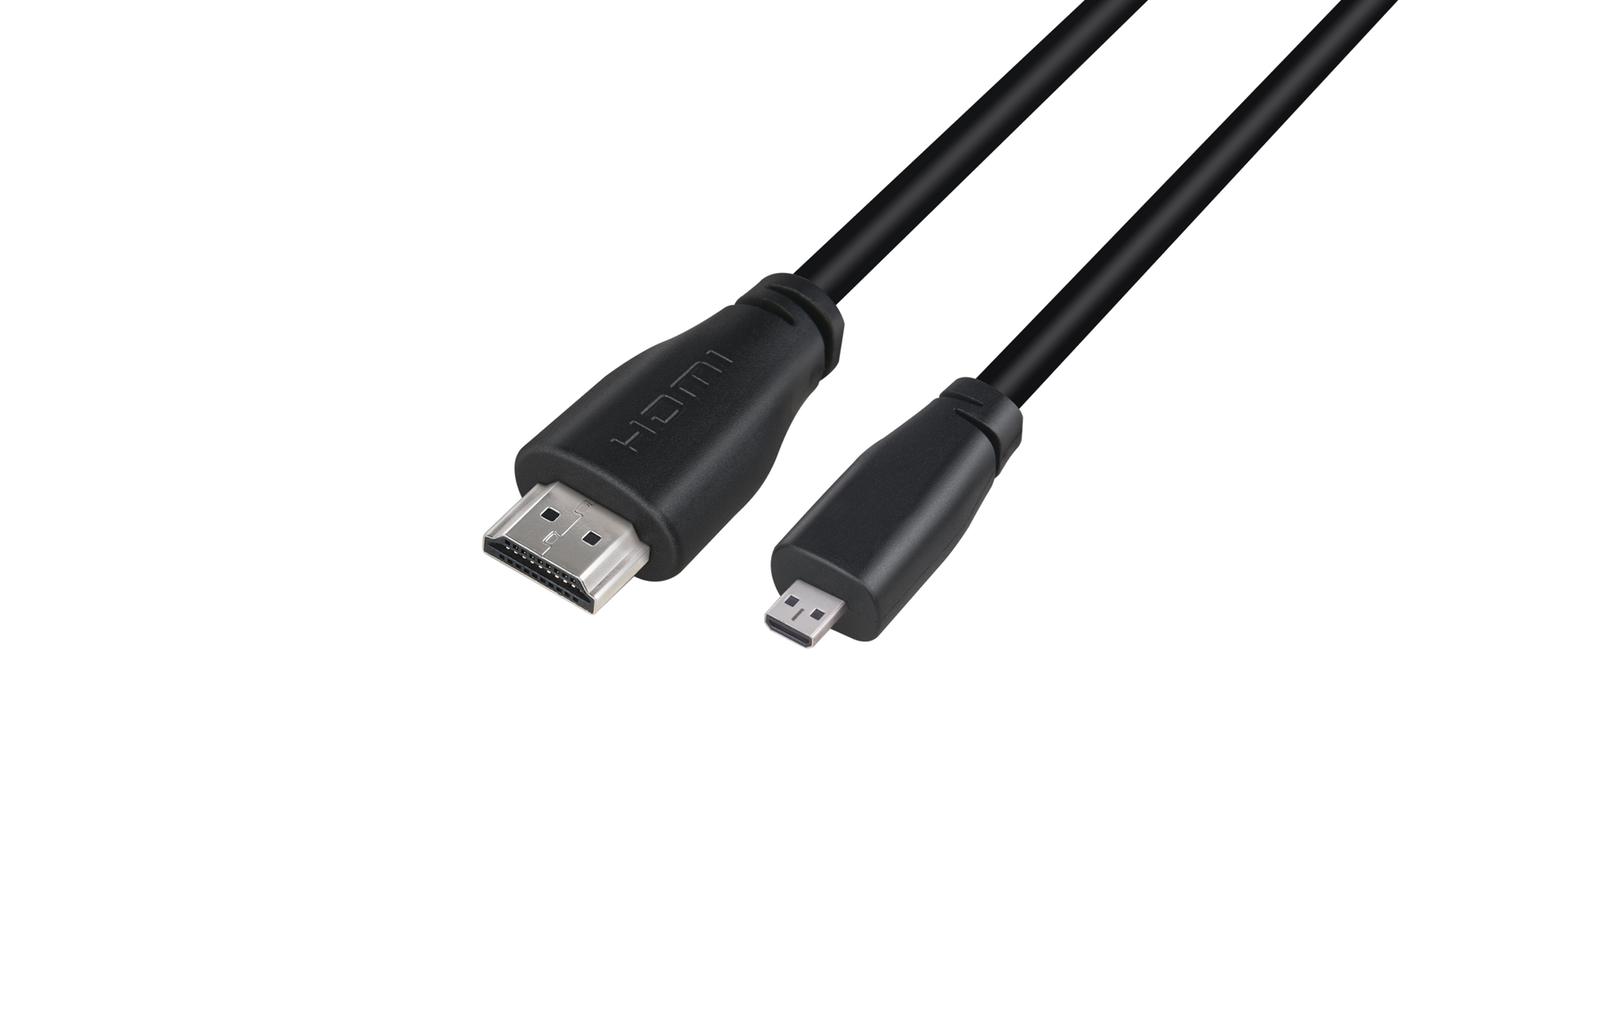 HDMI Cable for Raspberry Pi 1 mtr Black